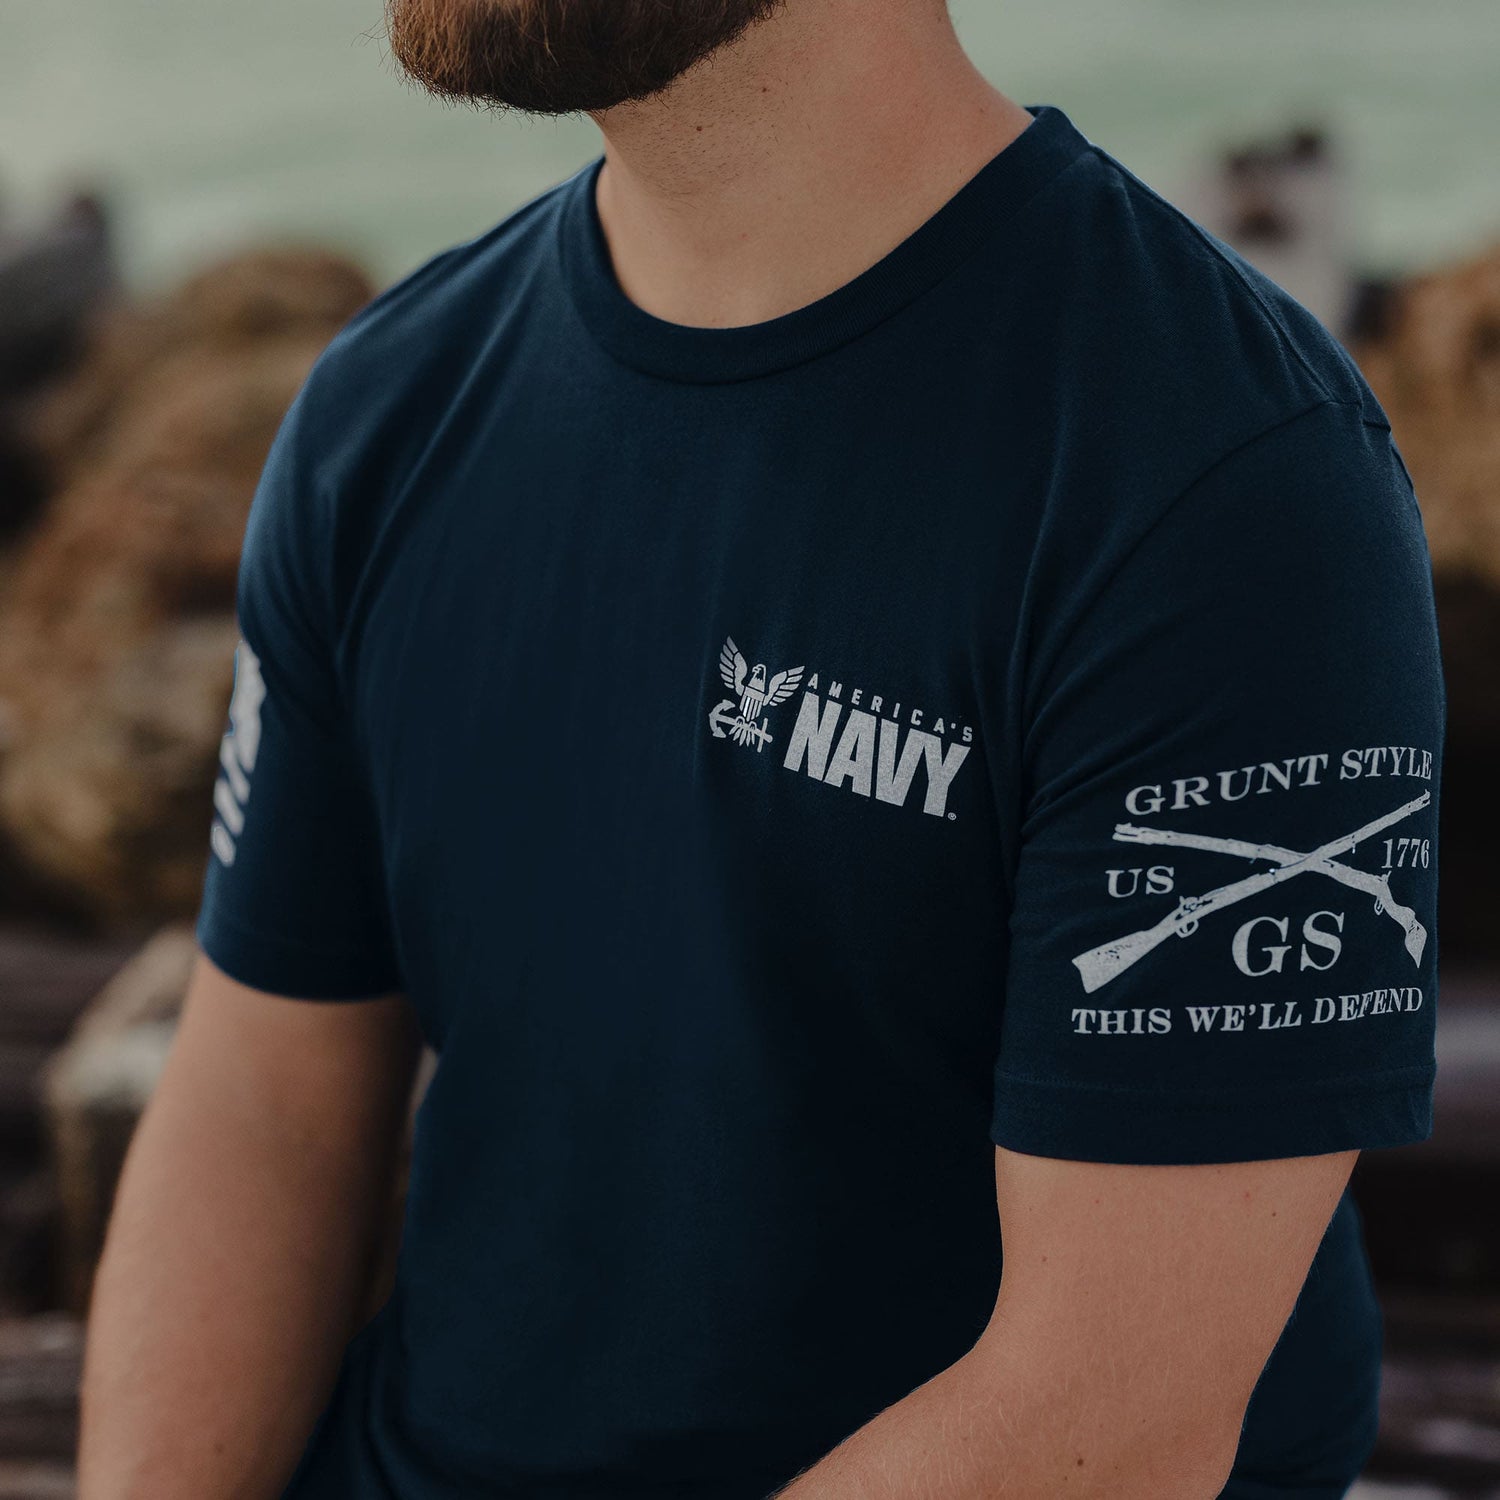 Men's USN Shirt - Shellback Seal | Grunt Style 